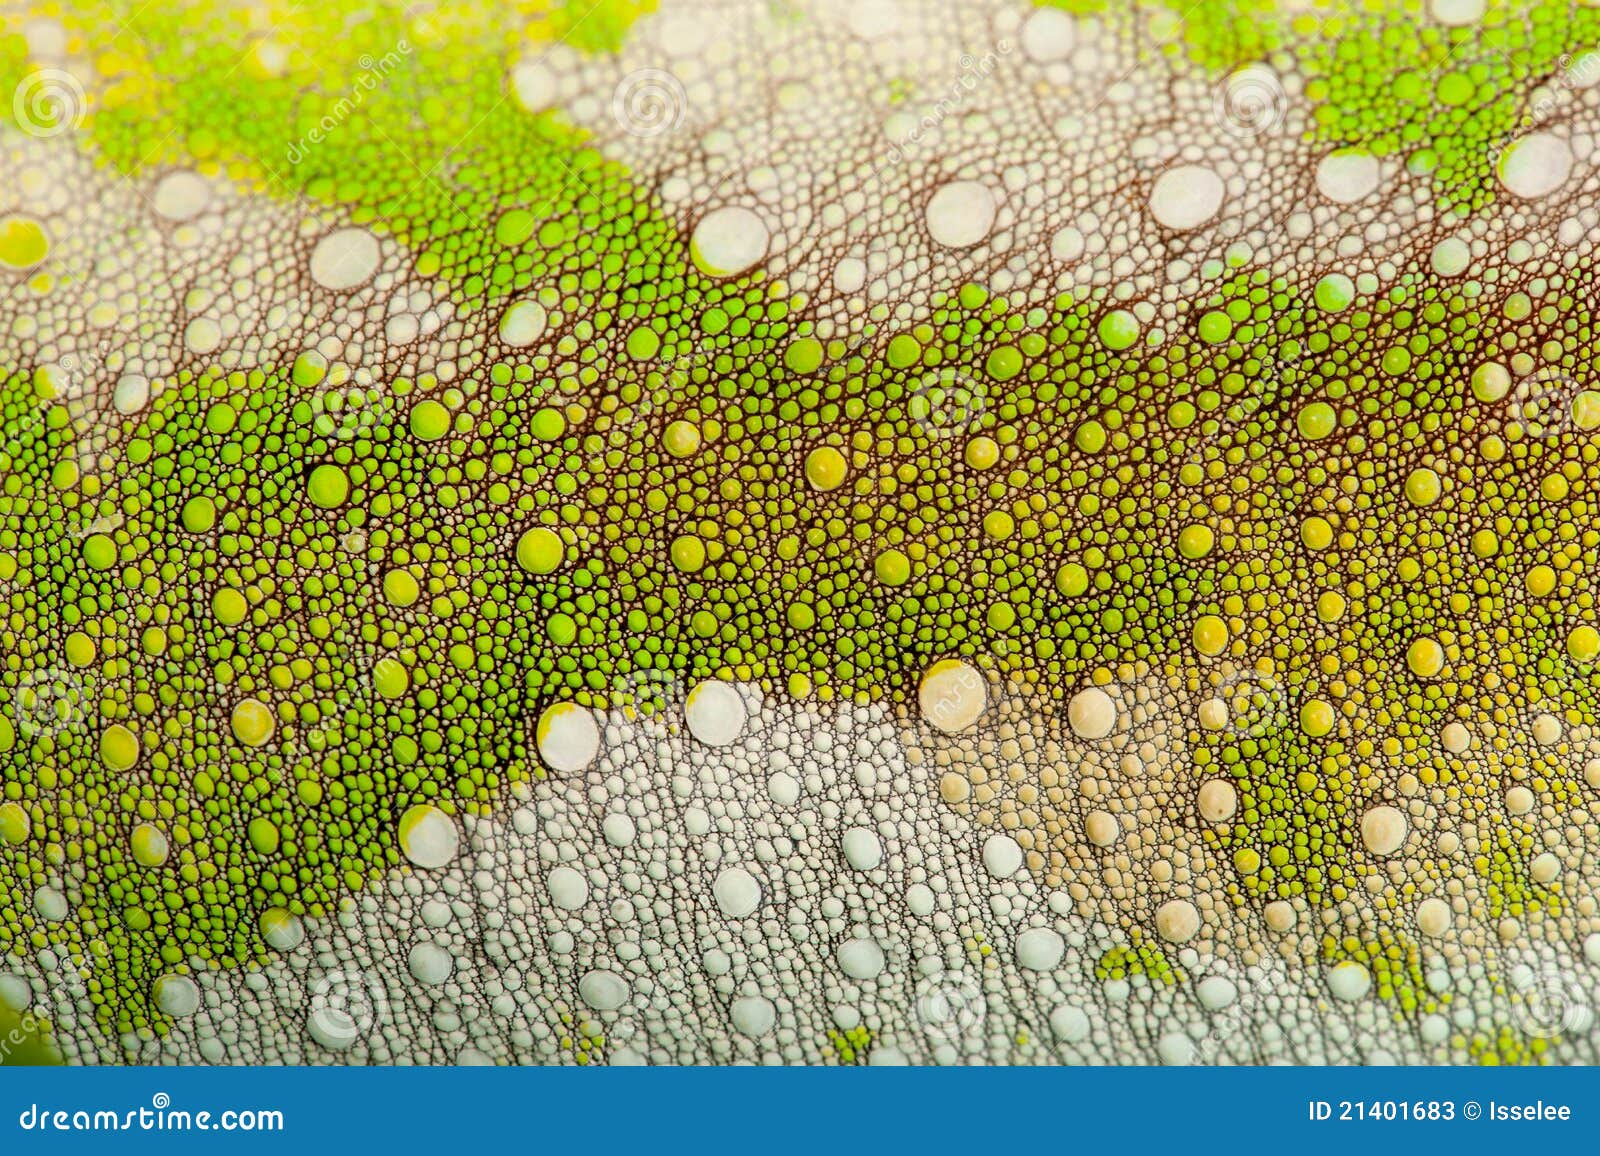 Кожа хамелеона. Кожа хамелеона под микроскопом. Клетки кожи хамелеона. Кожа хамелеона текстура.